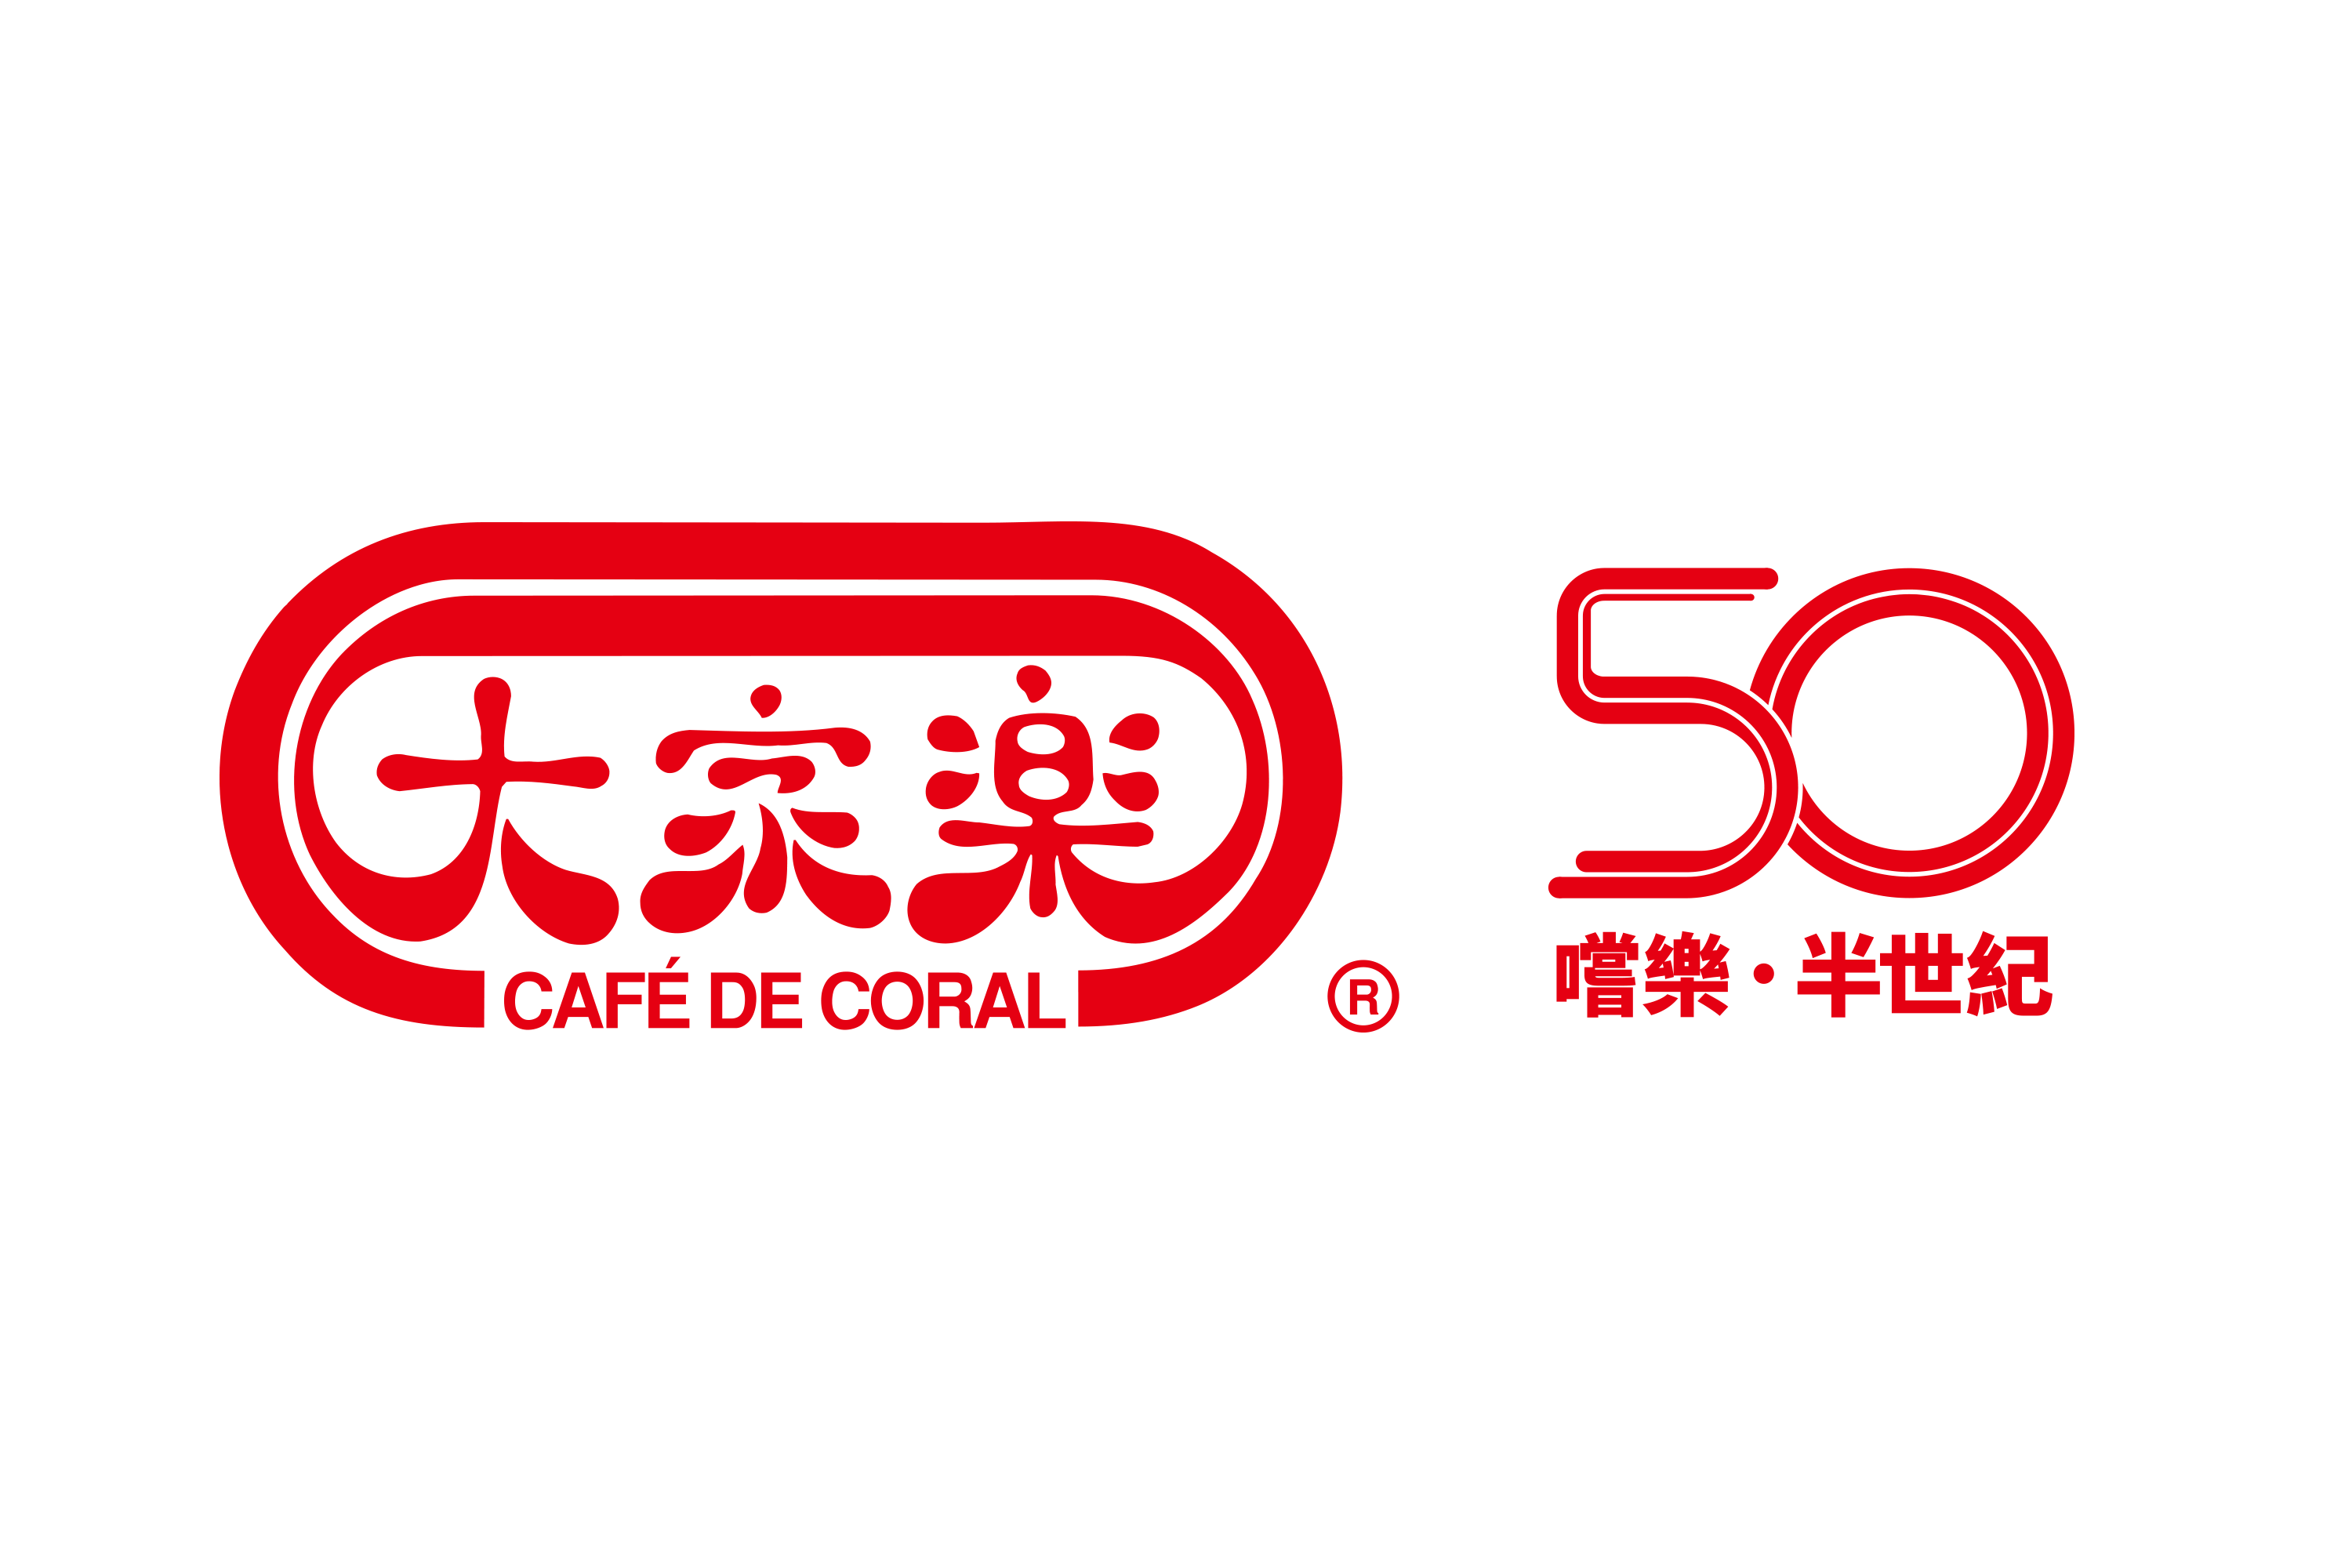 Corporate logo + 50A logo